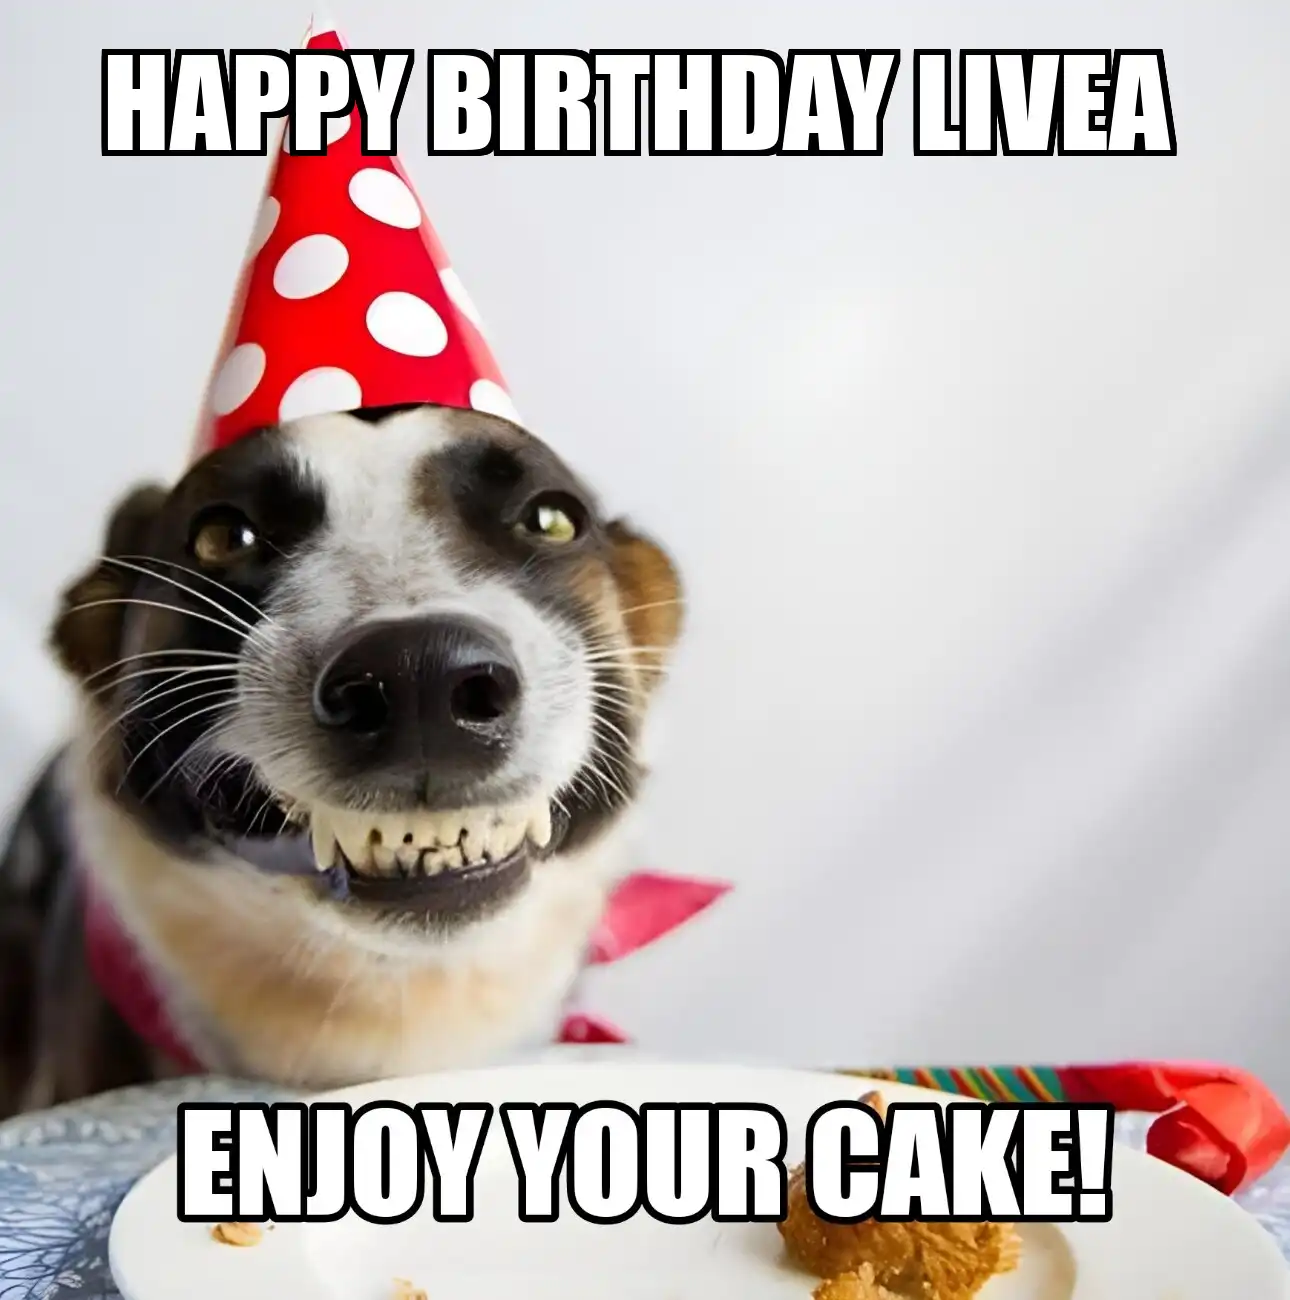 Happy Birthday Livea Enjoy Your Cake Dog Meme